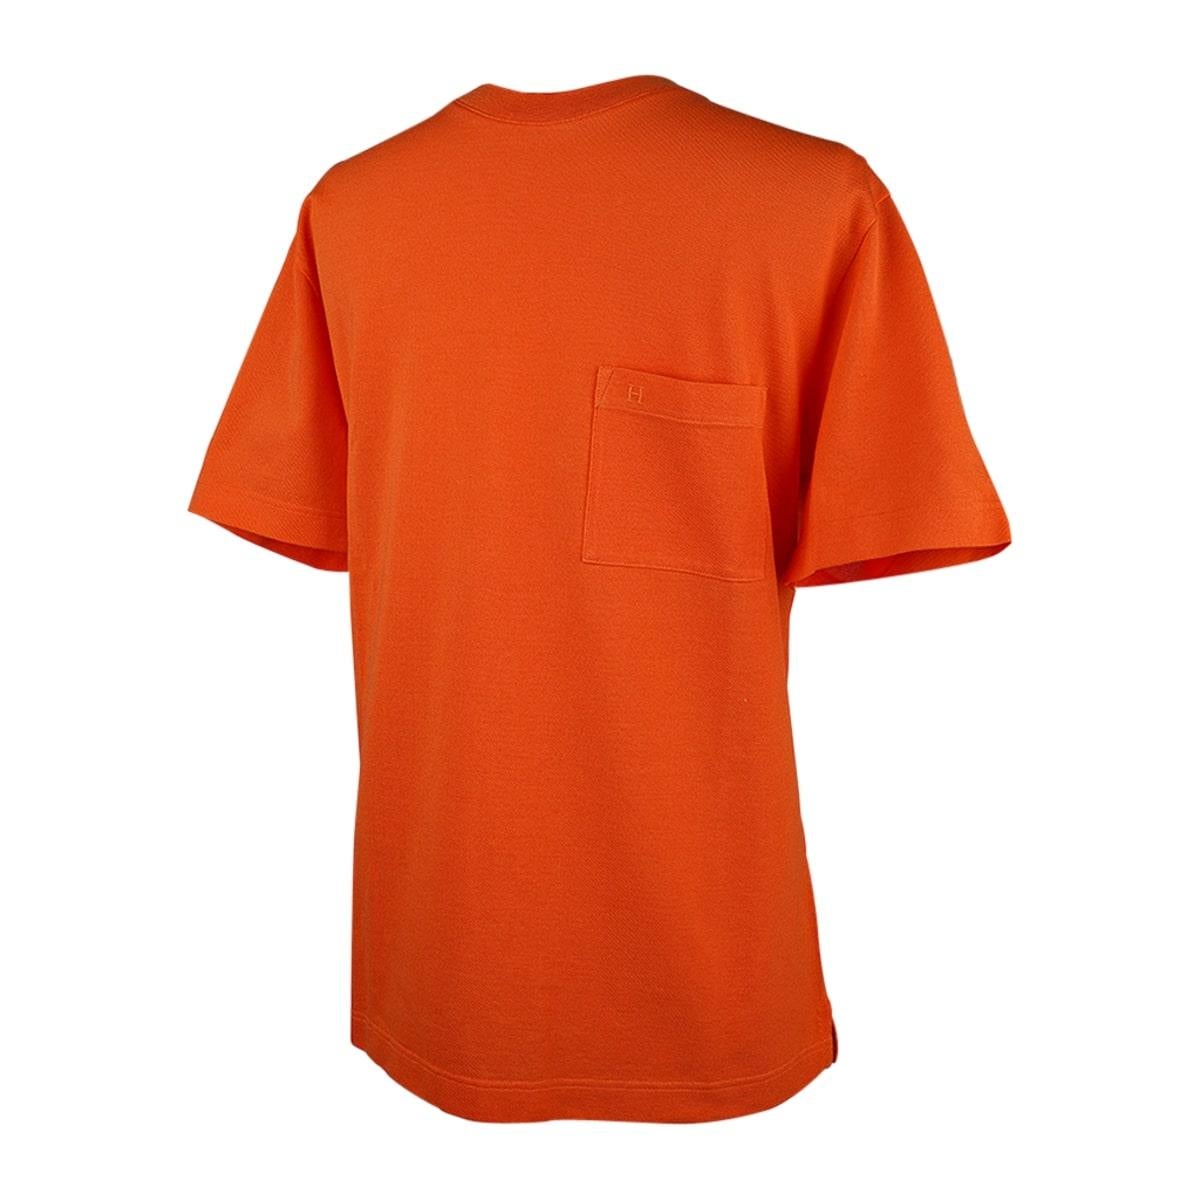 Hermes Men's T-Shirt Crewneck Ras du Cou Orange M In New Condition For Sale In Miami, FL